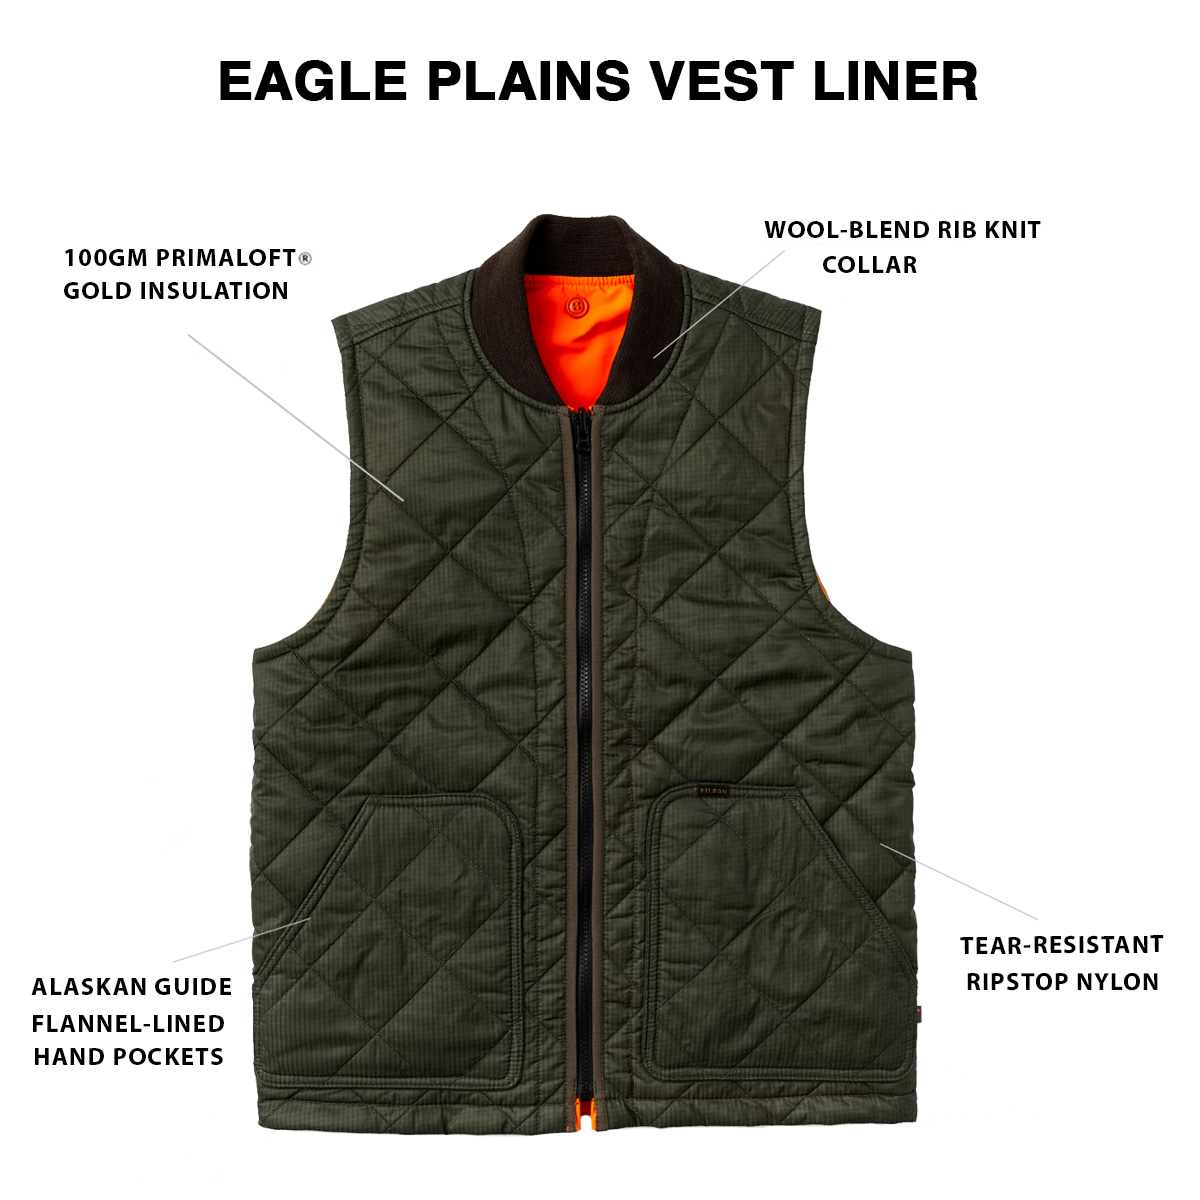 Filson Eagle Plains Vest Liner Surplus Green Blaze, with Cordura® Ripstop nylon and 100gm PrimaLoft® Gold insulation